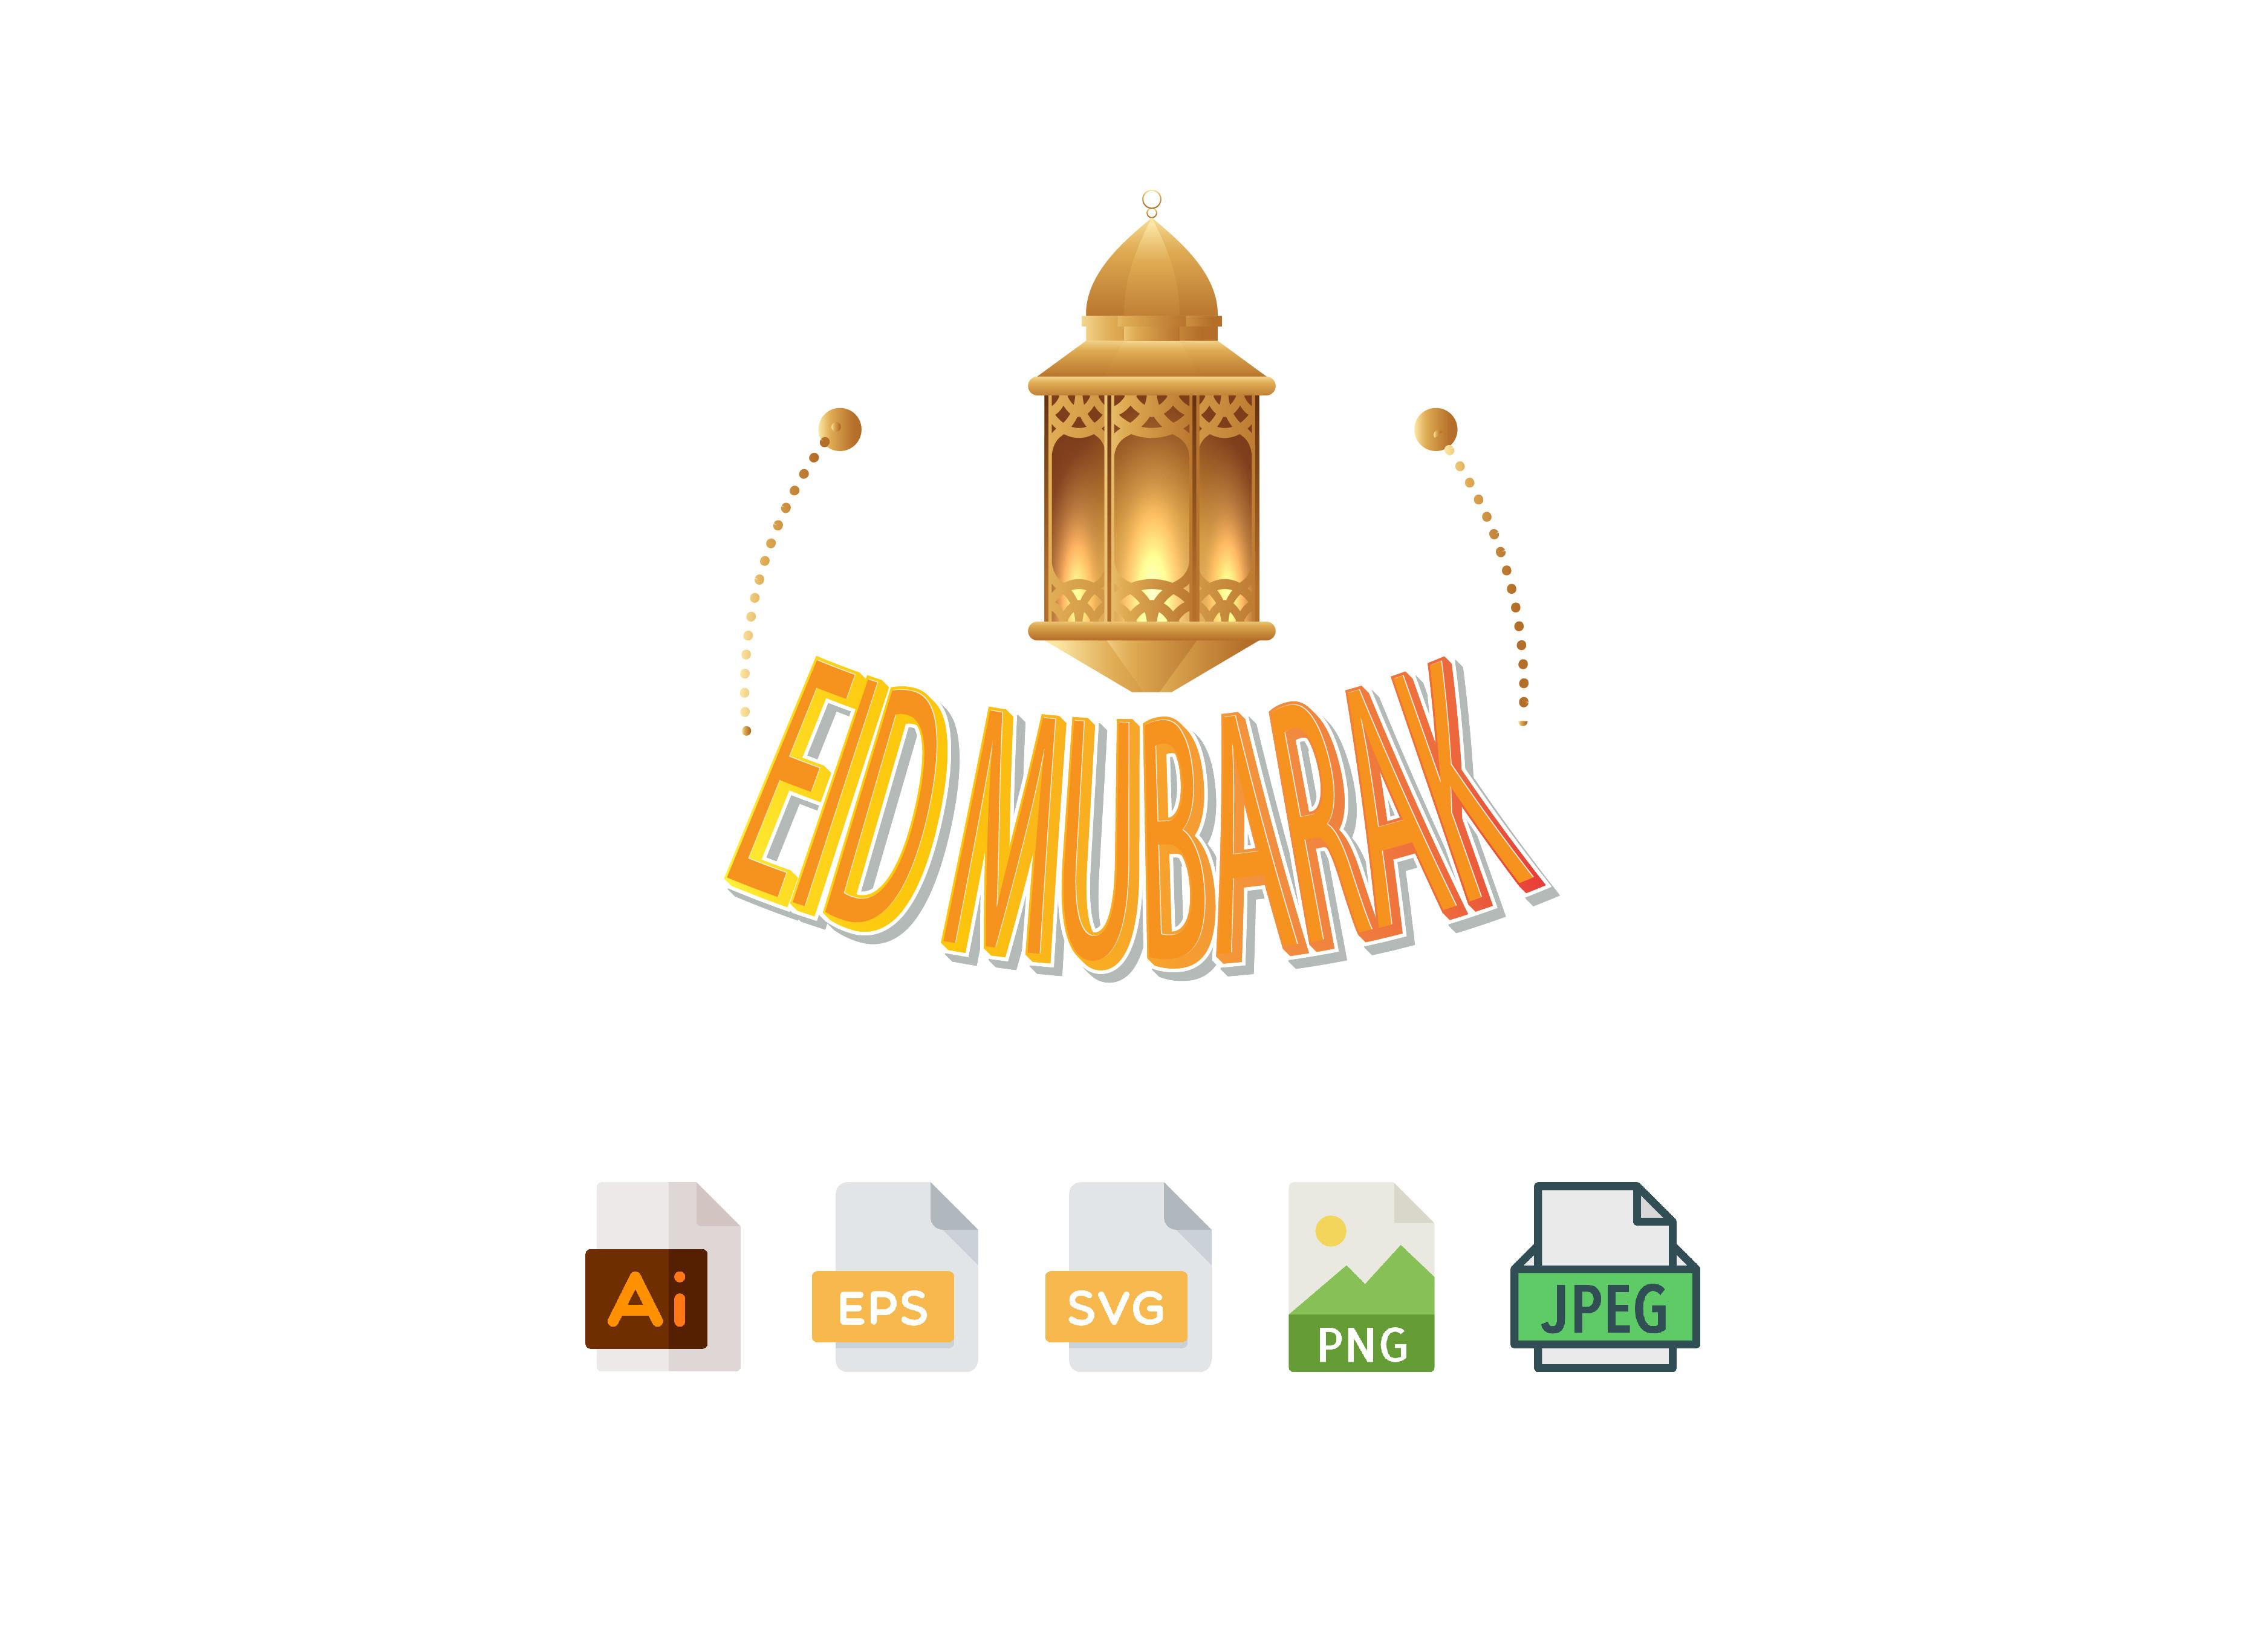 Eid Mubarak SVG